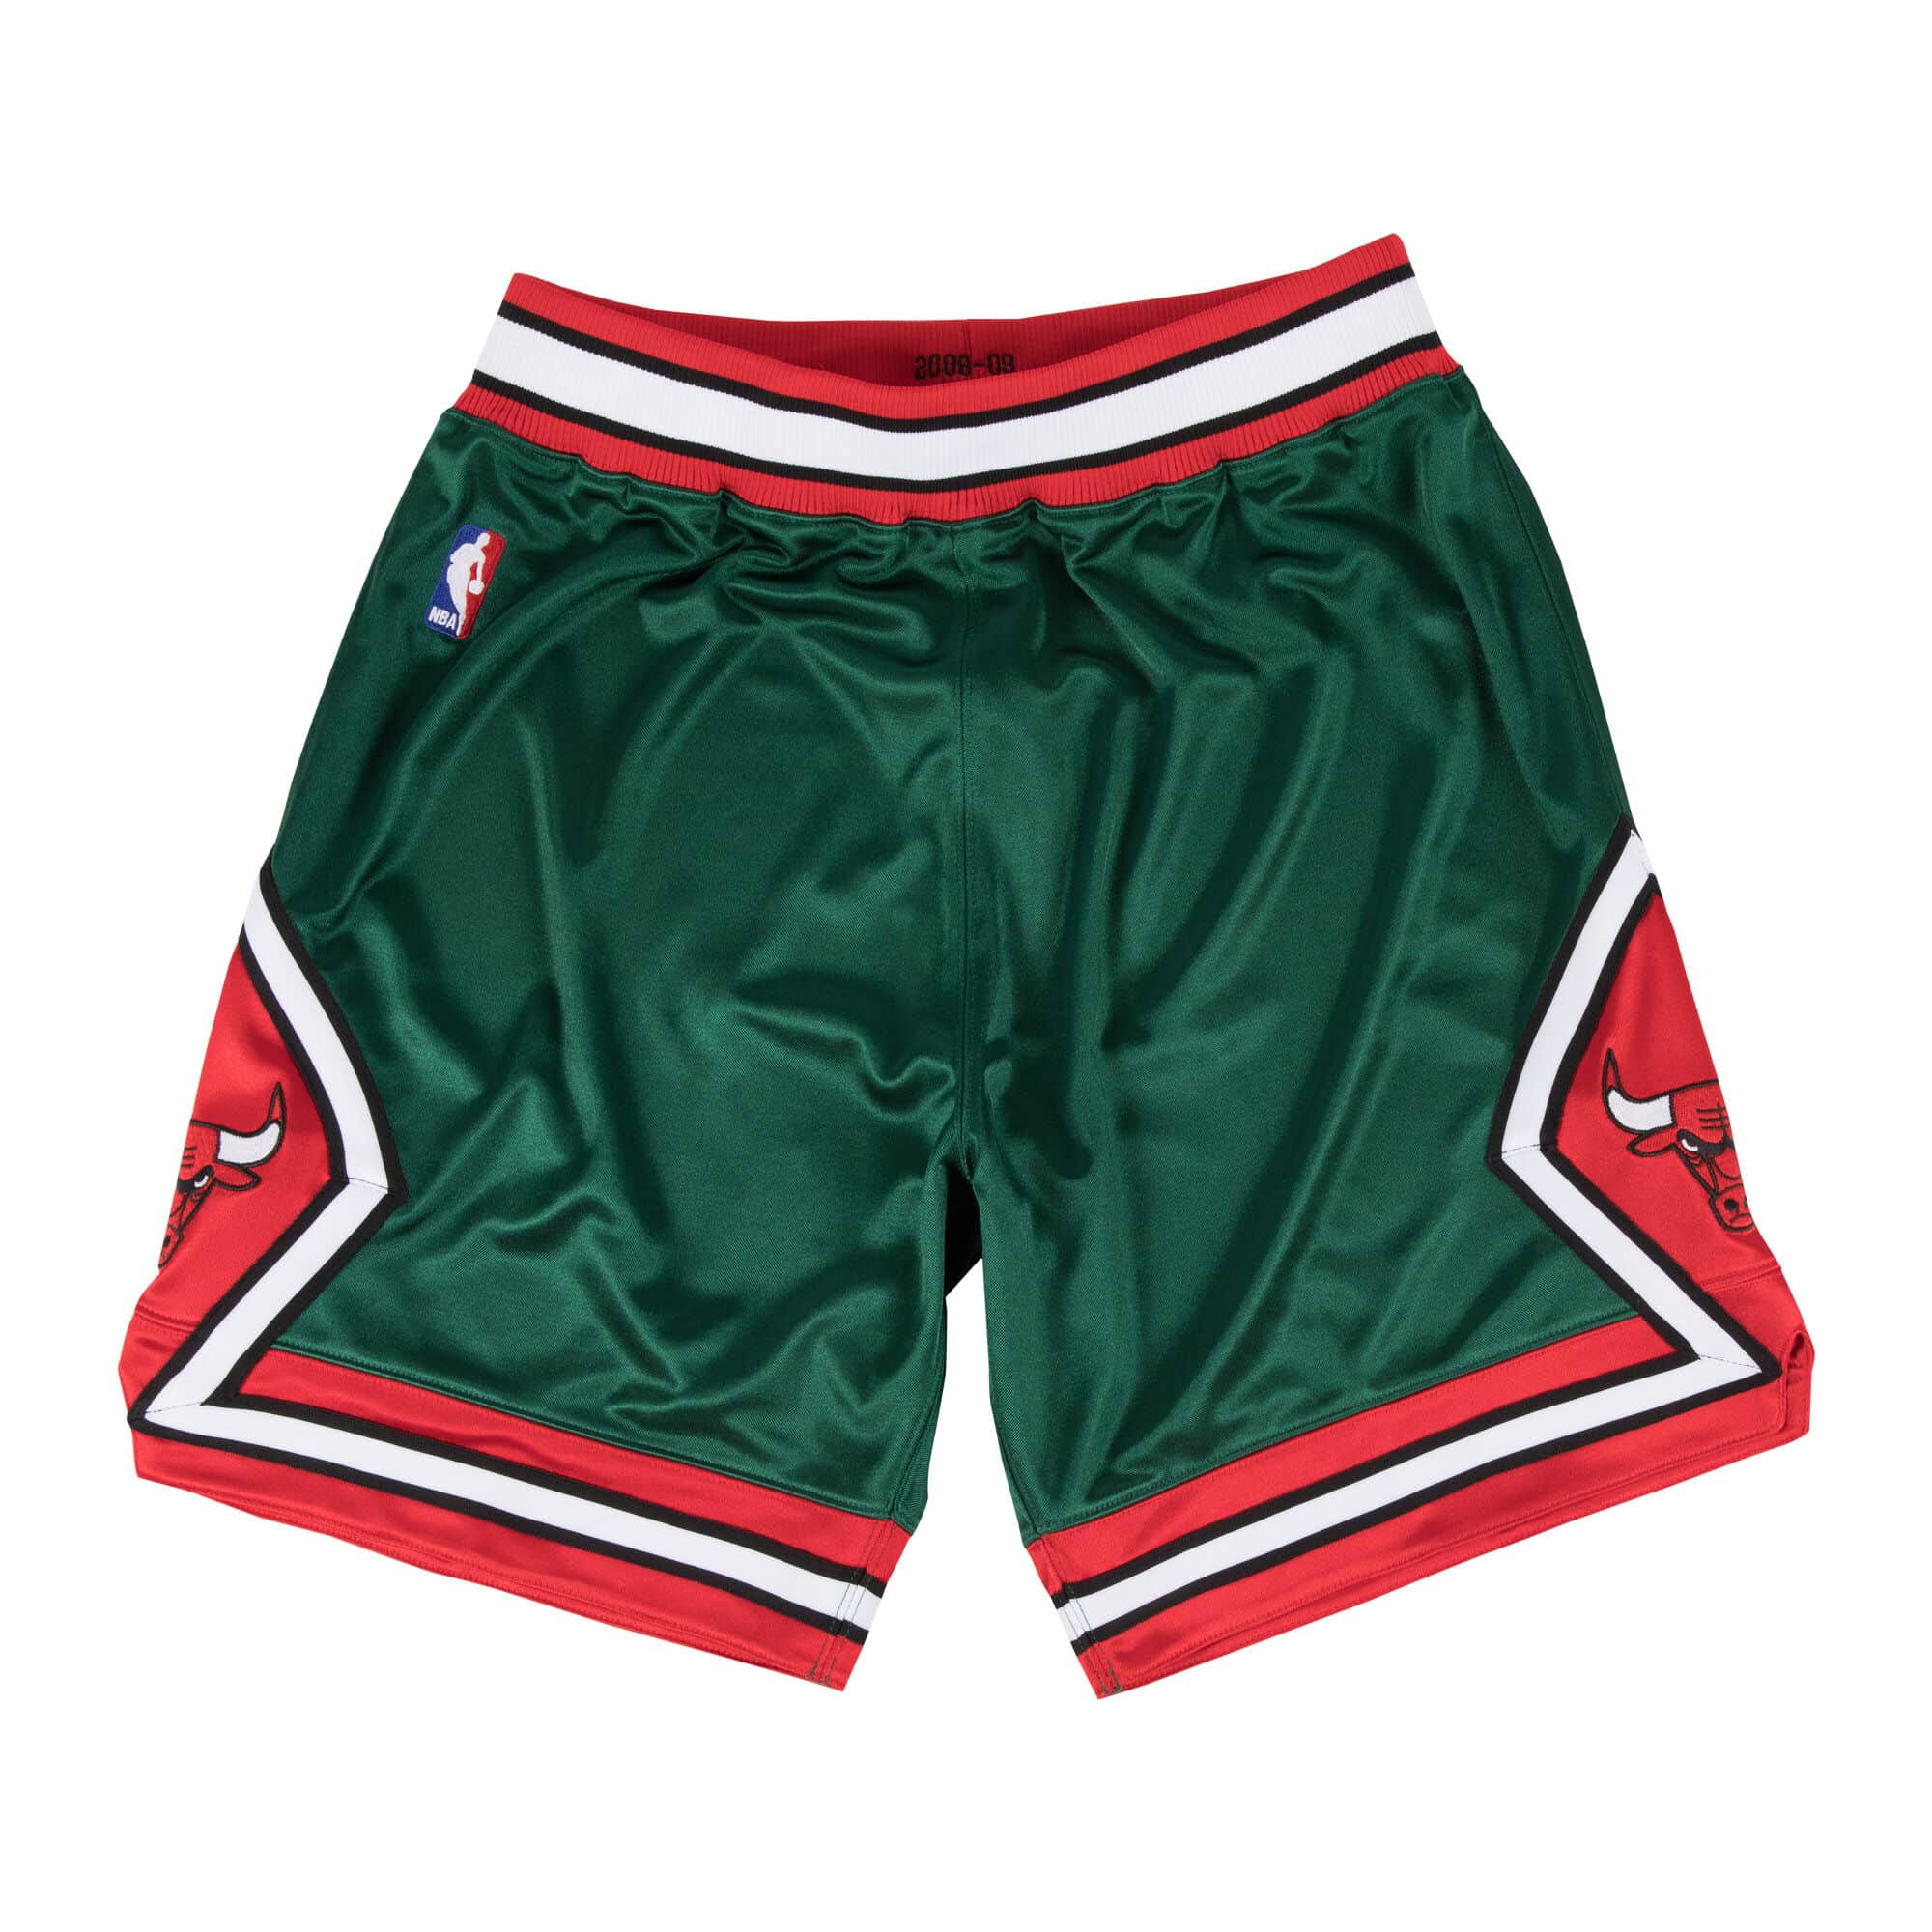 Mitchell & Ness 2008-09 Chicago Bulls Authentic Short – The Almanac Brand